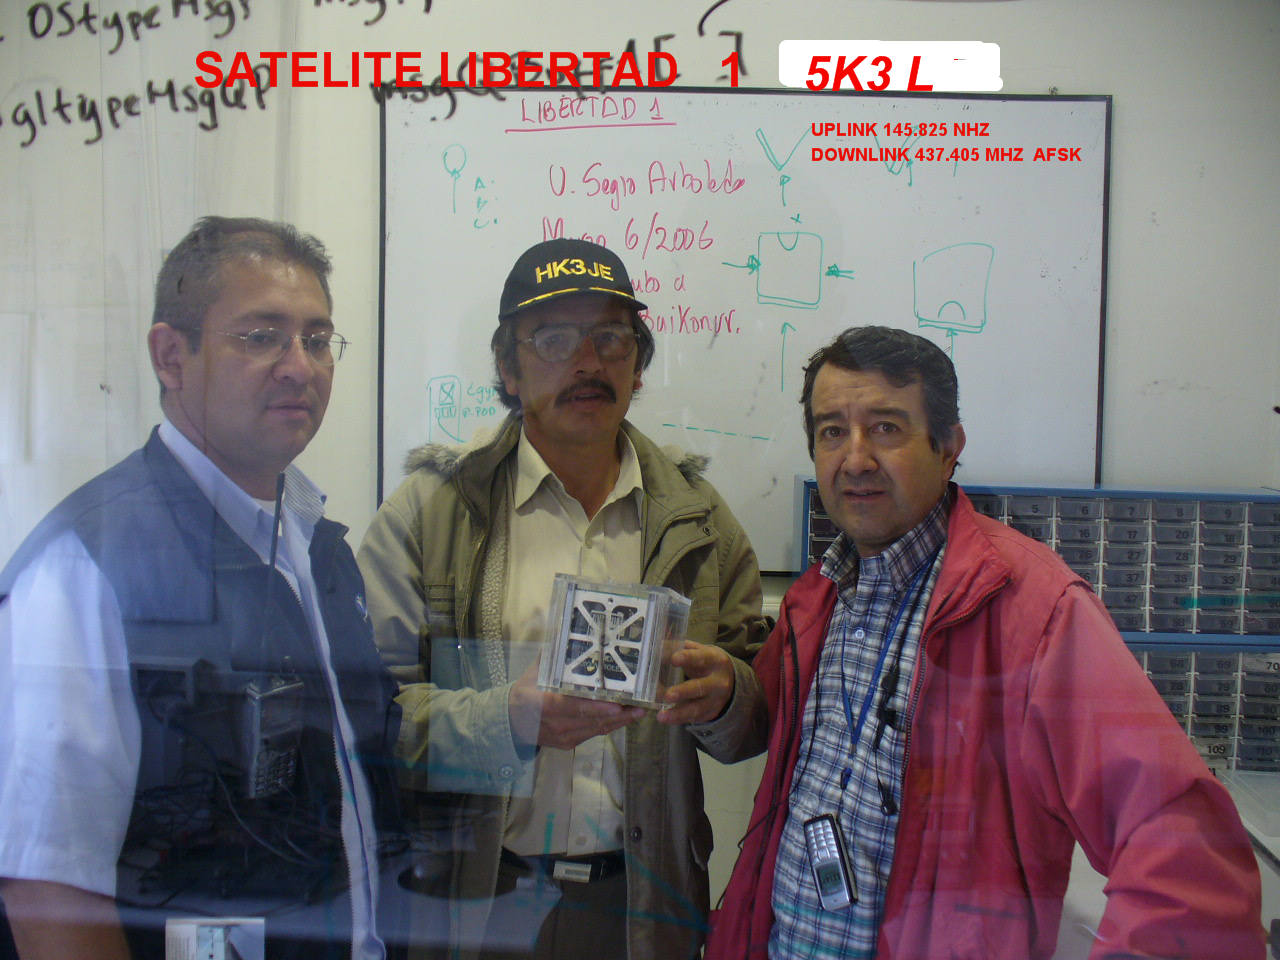 Satelte Libertad 1 CUBESAT Colombia